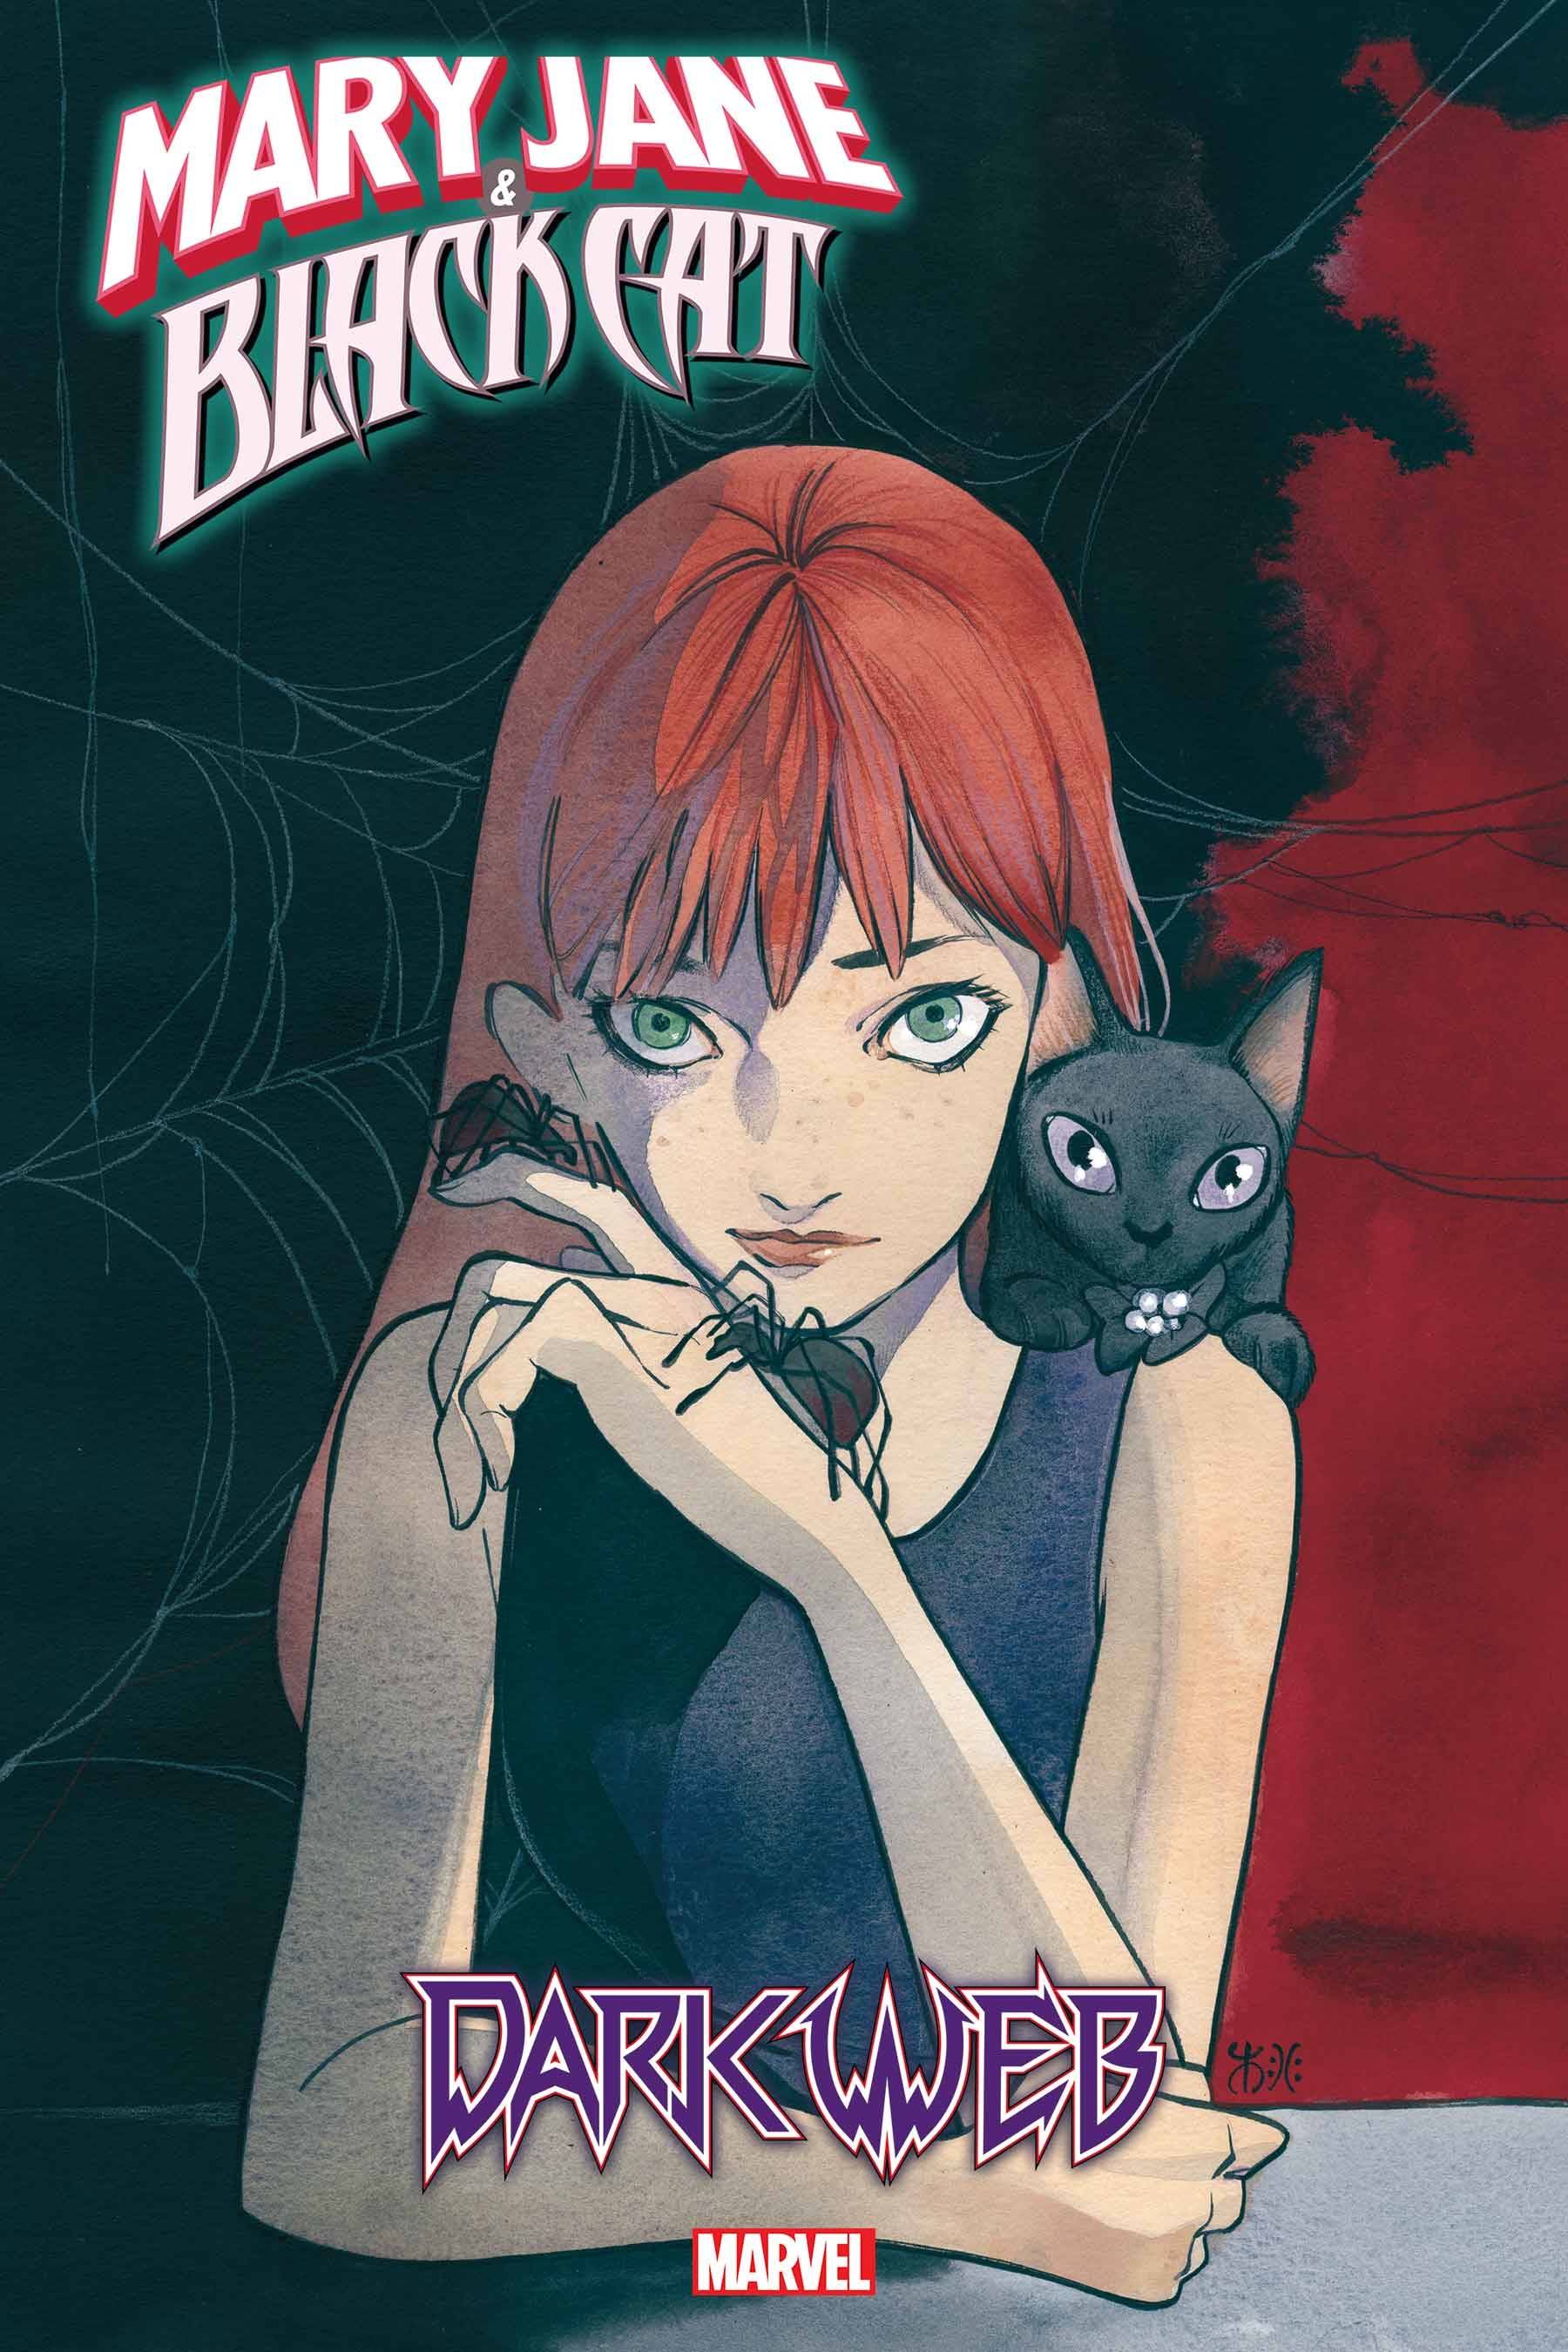 12/21/2022 MARY JANE AND BLACK CAT #1 (OF 5) MOMOKO VARIANT